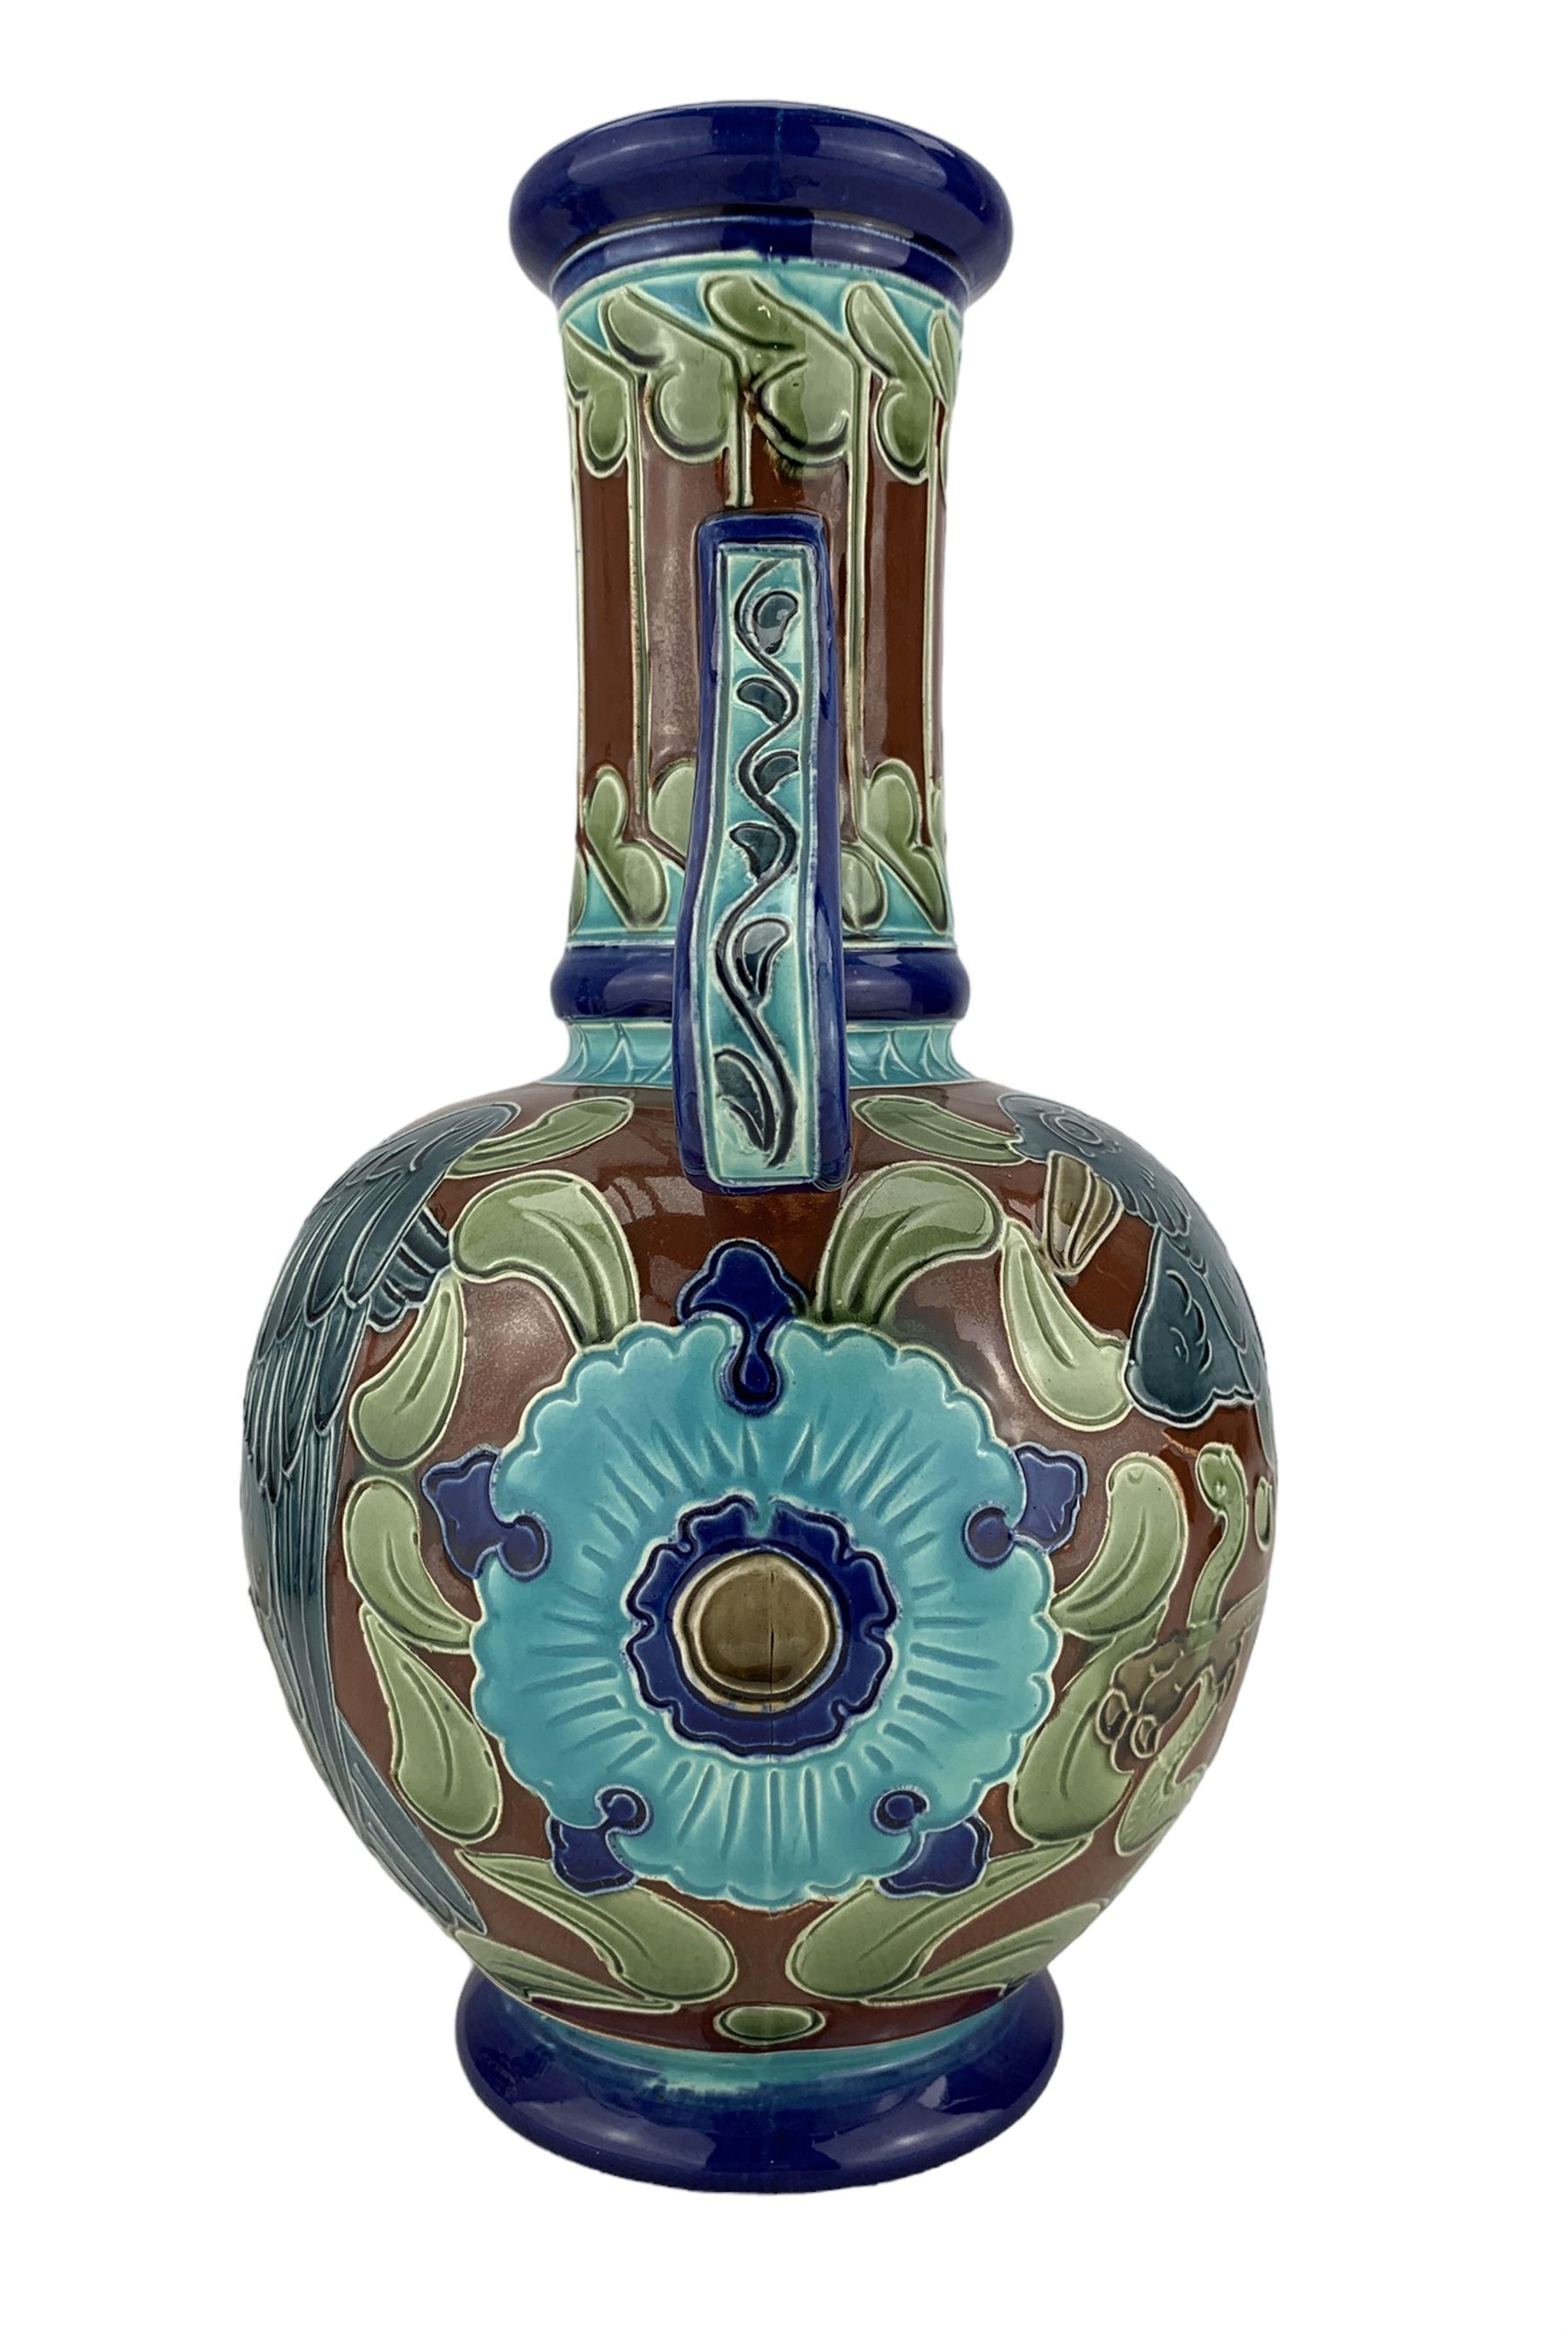 Burmantofts Faience partie-colour twin-handled vase - Image 4 of 6